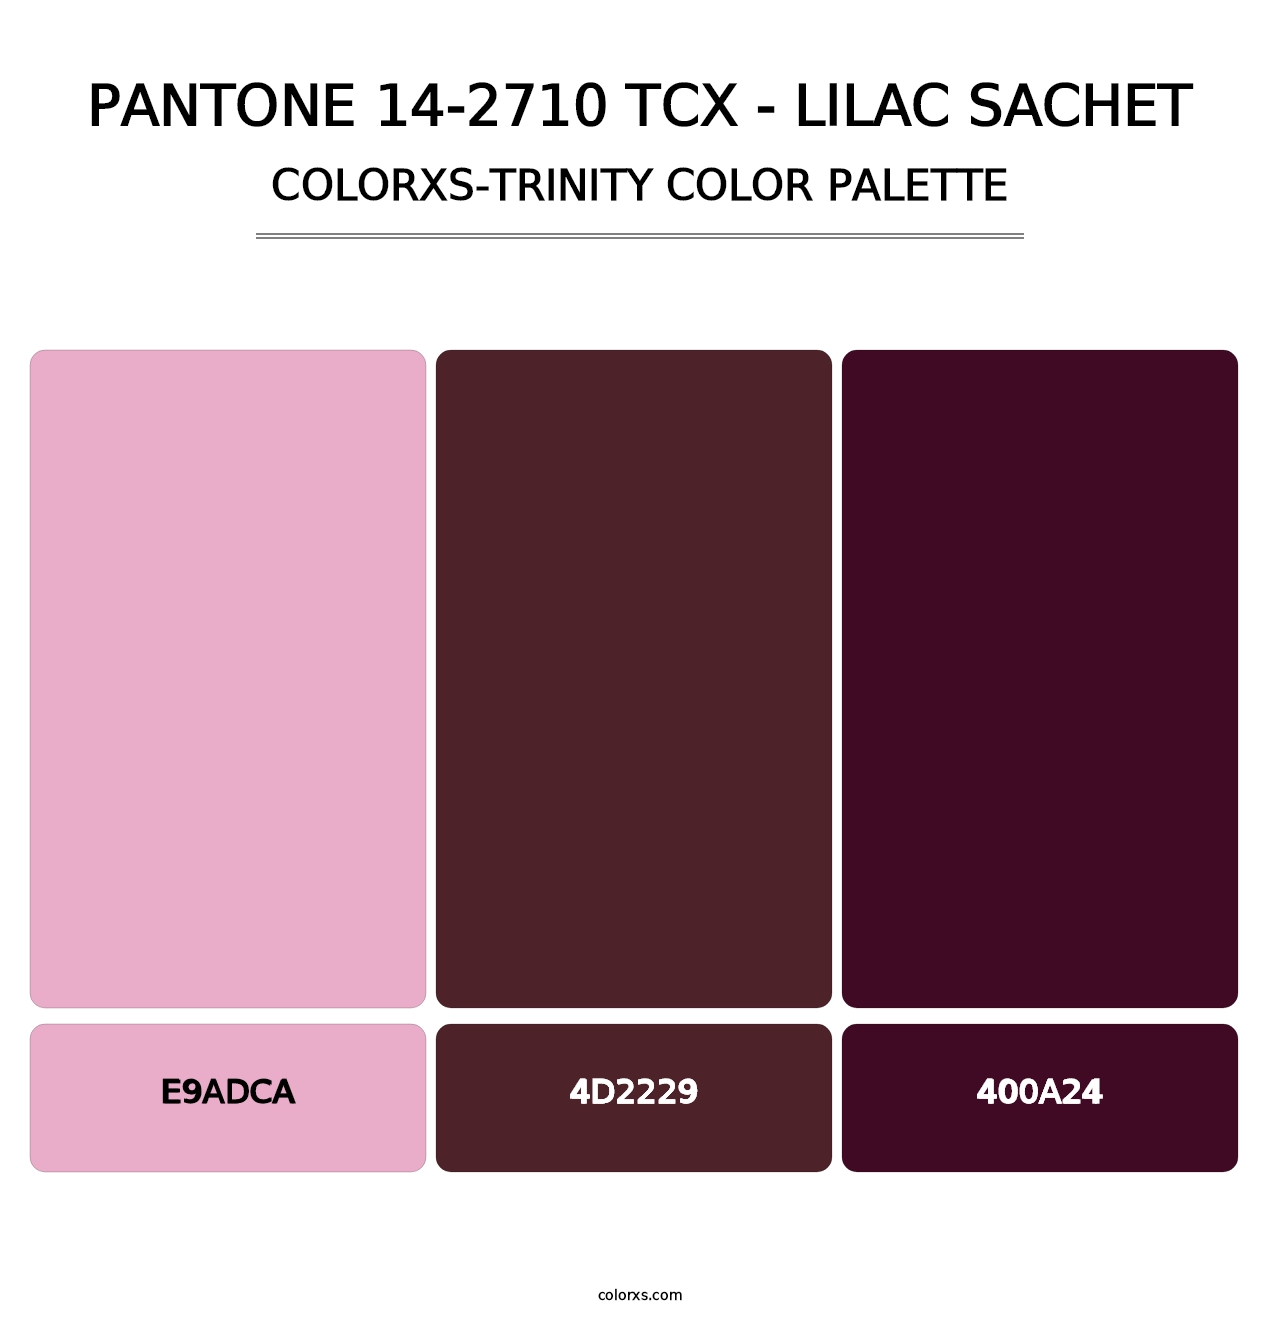 PANTONE 14-2710 TCX - Lilac Sachet - Colorxs Trinity Palette